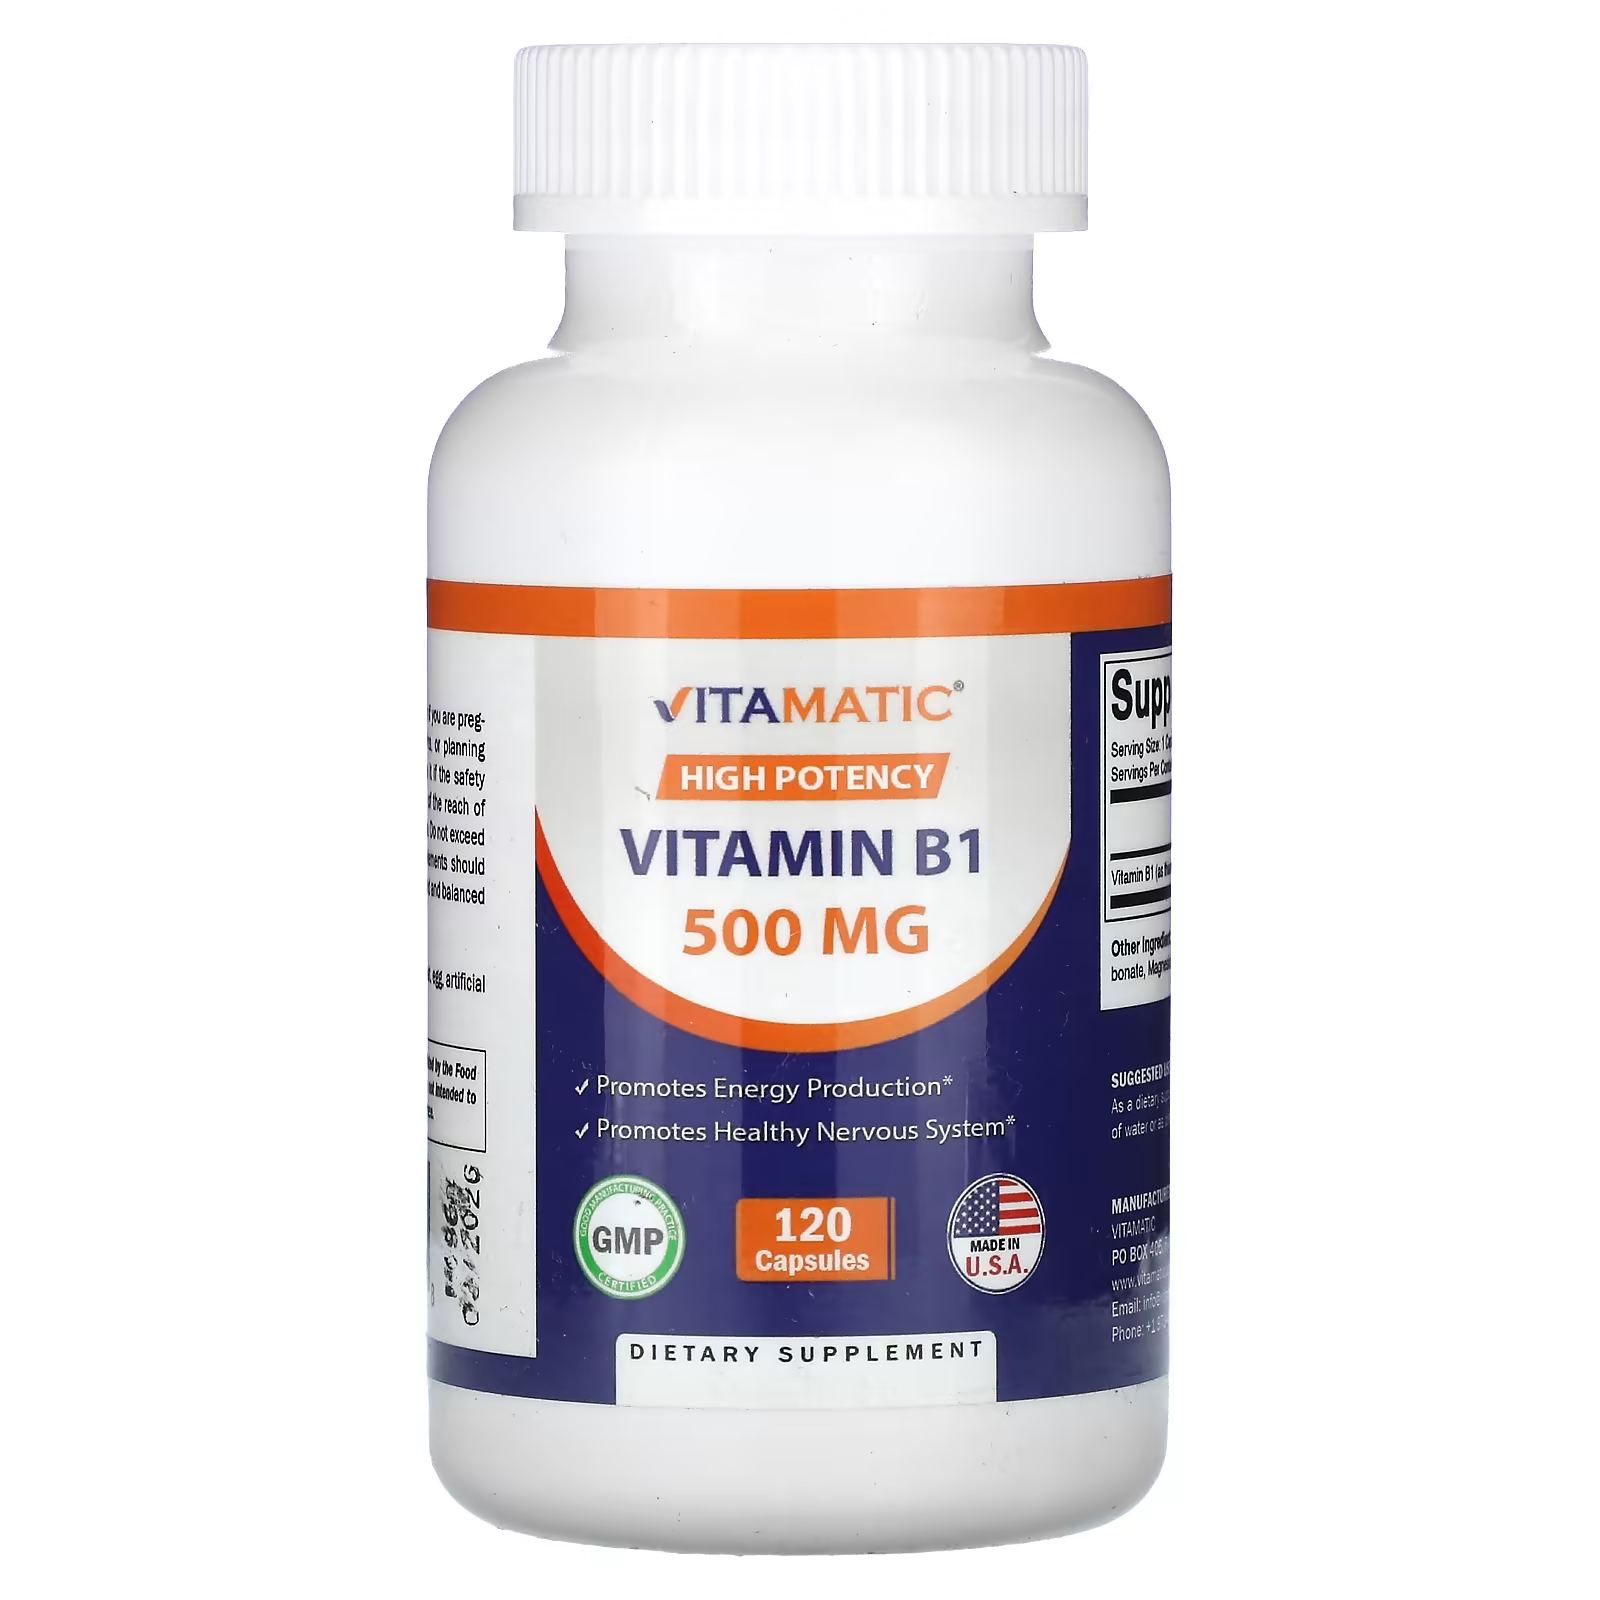 Vitamatic Высокоэффективный витамин B1 500 мг 120 капсул vitamatic корень валерианы высокоэффективный продукт 1300 мг 240 капсул